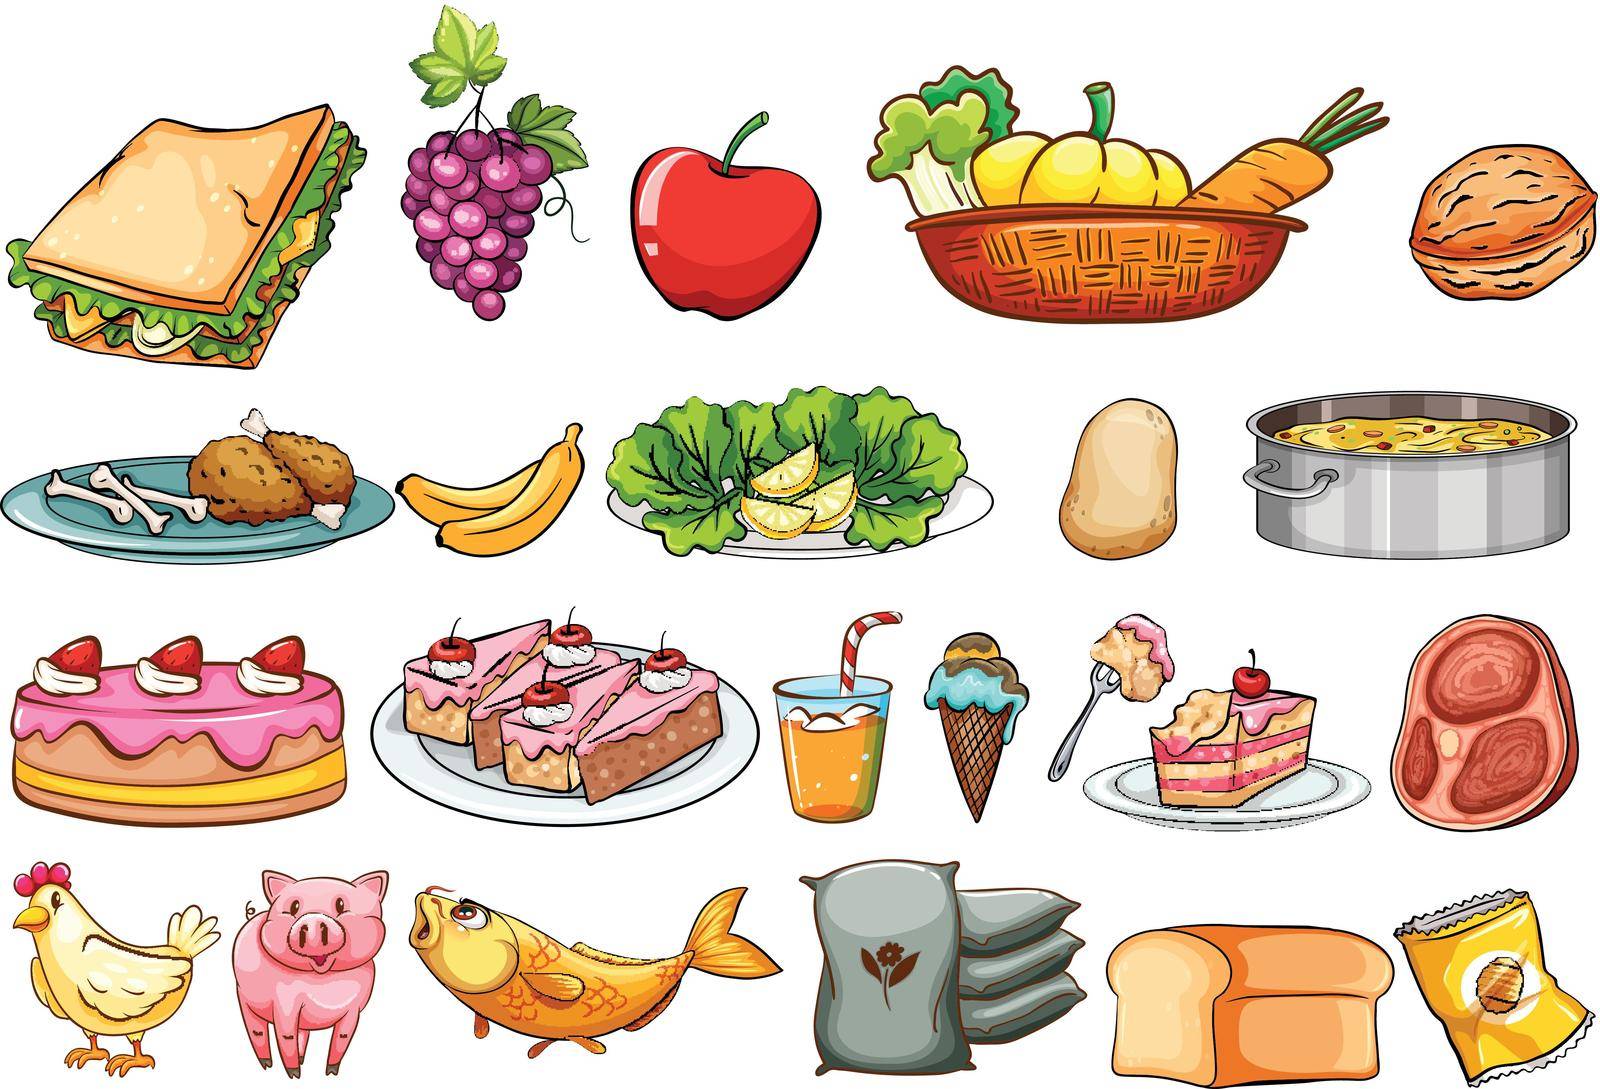 Food and ingredients set illustration